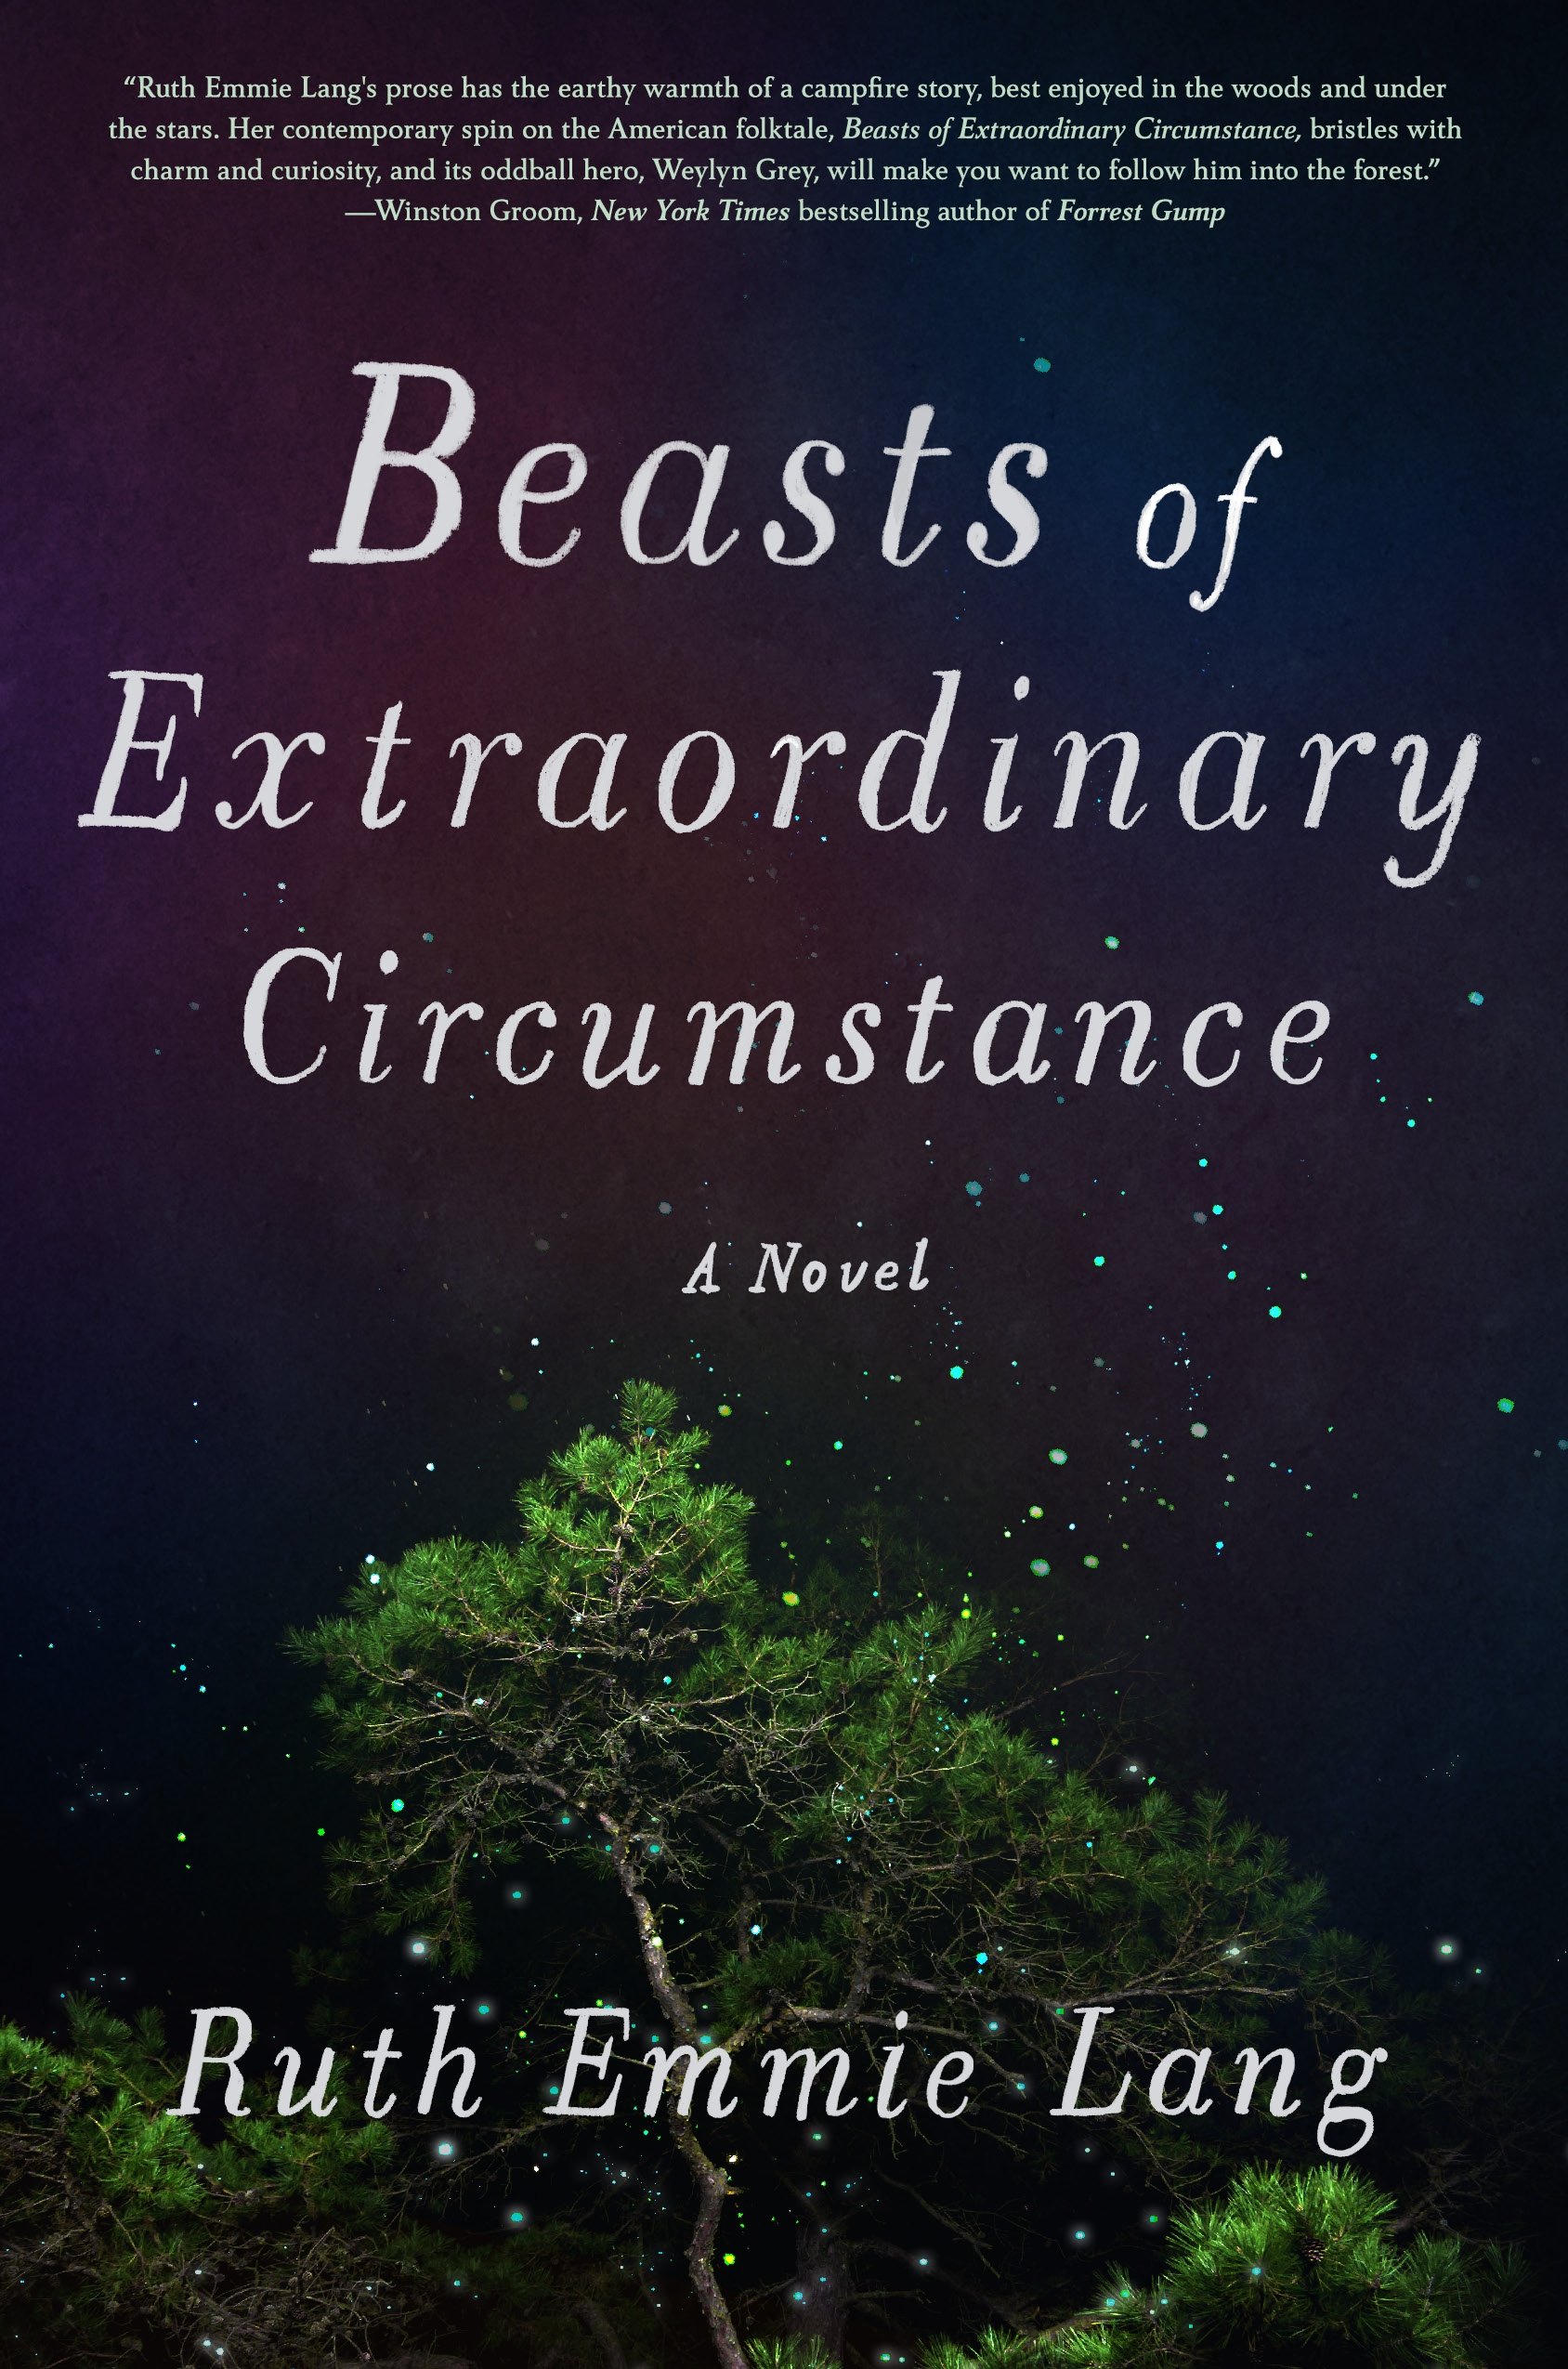 Beasts of Extraordinary Circumstance: A Novel